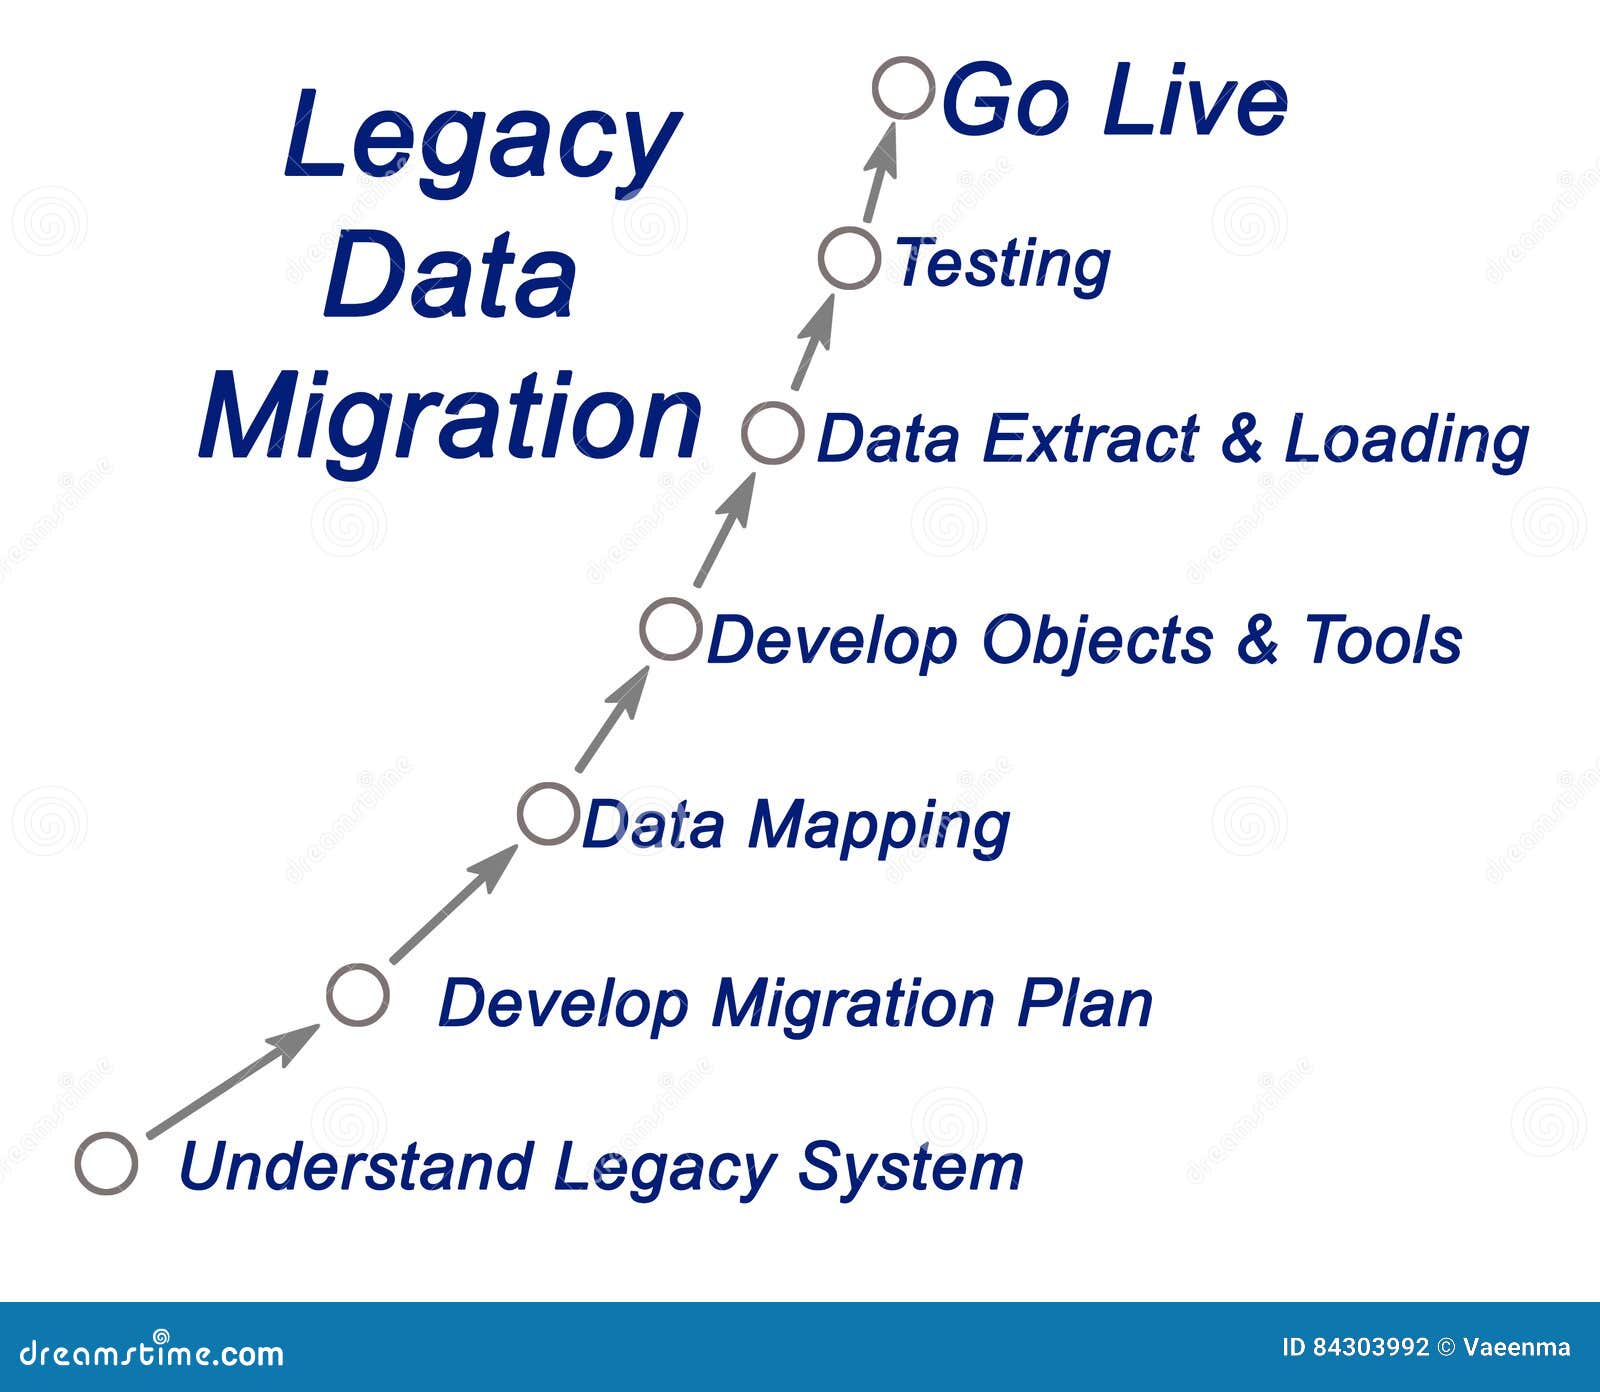 legacy data migration